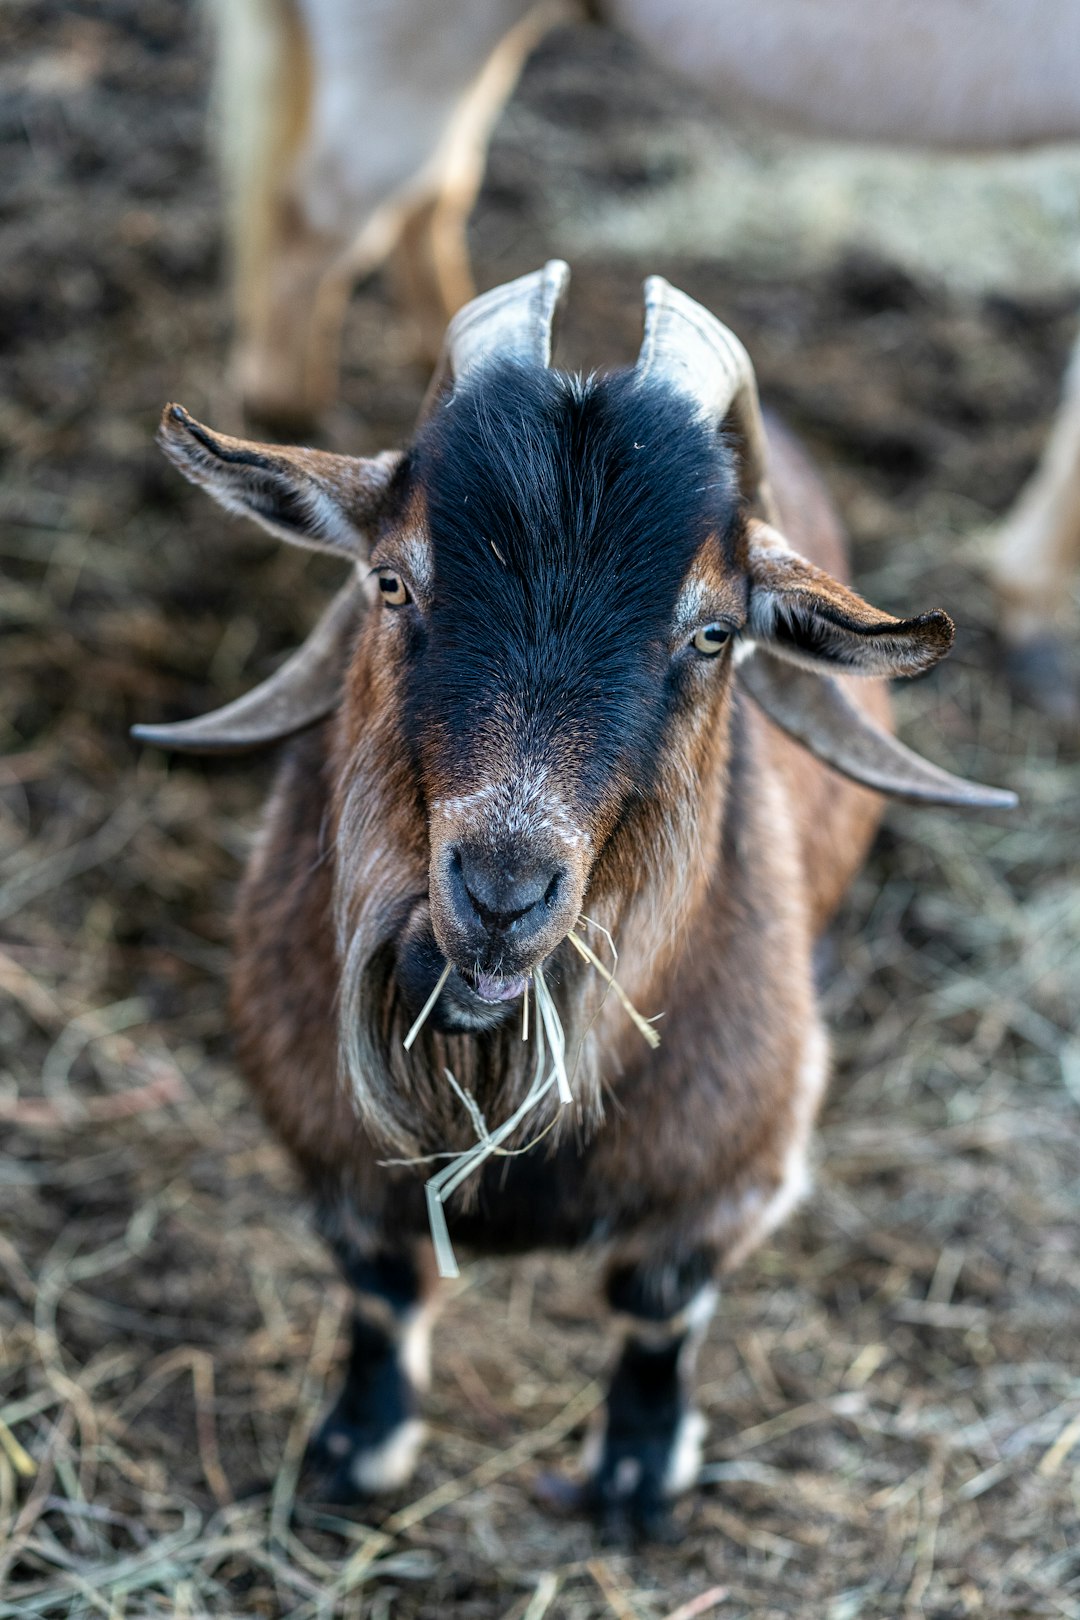 black and white goat on brown soil during daytime